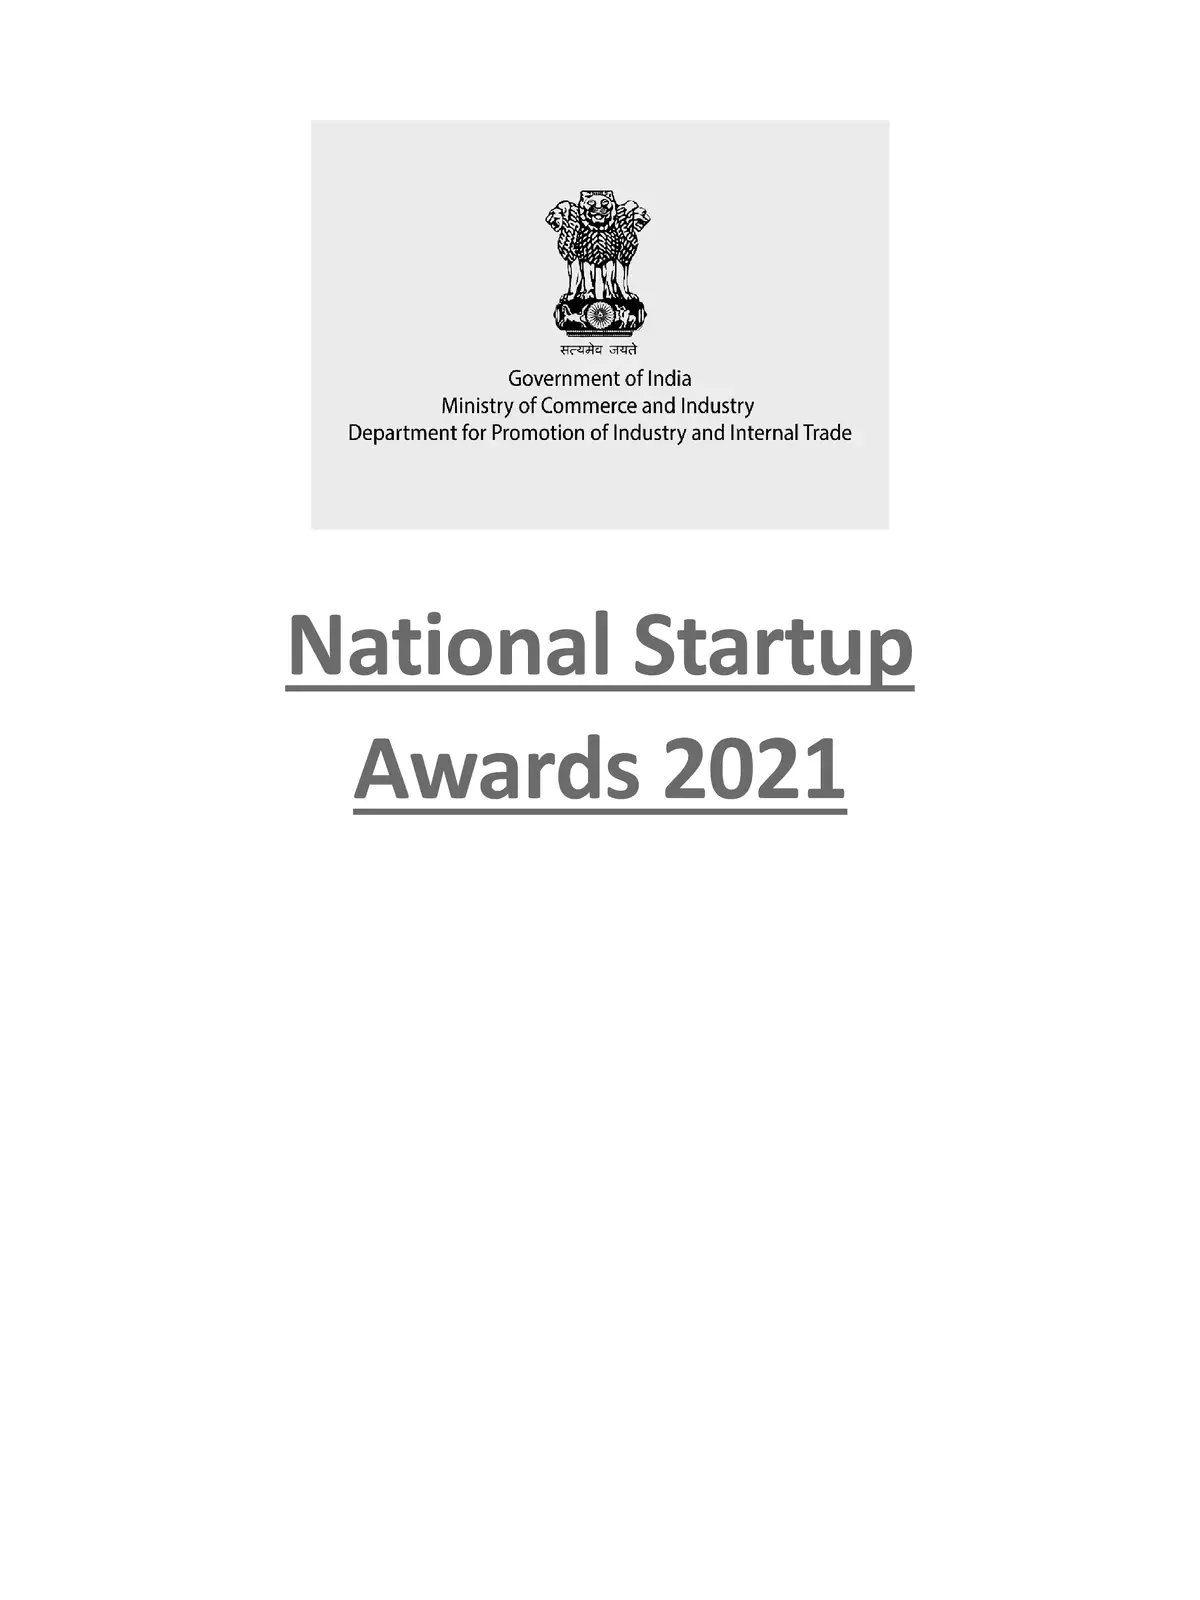 National Startup Awards 2021 Guidelines